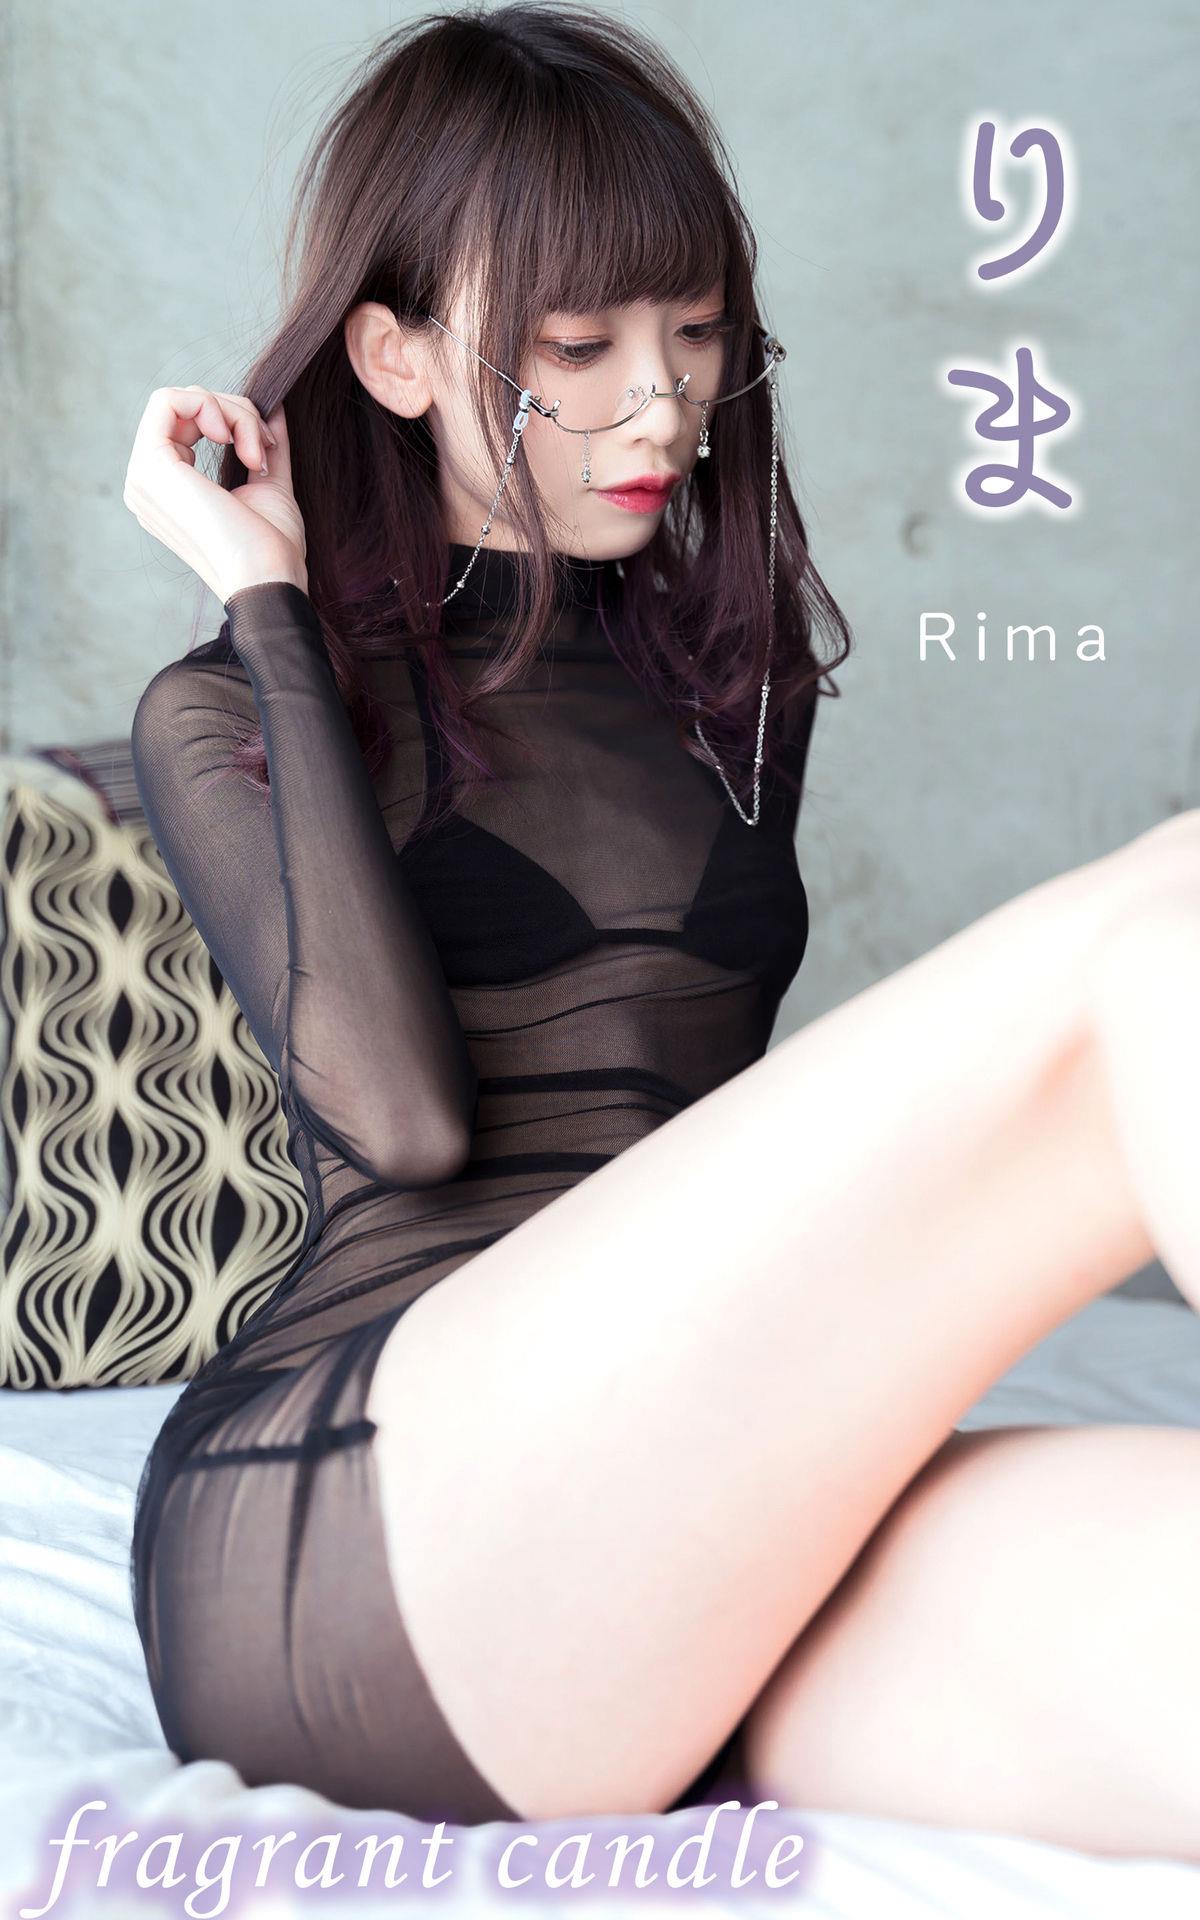 photobook Rima fragrant candle - 69.jpg